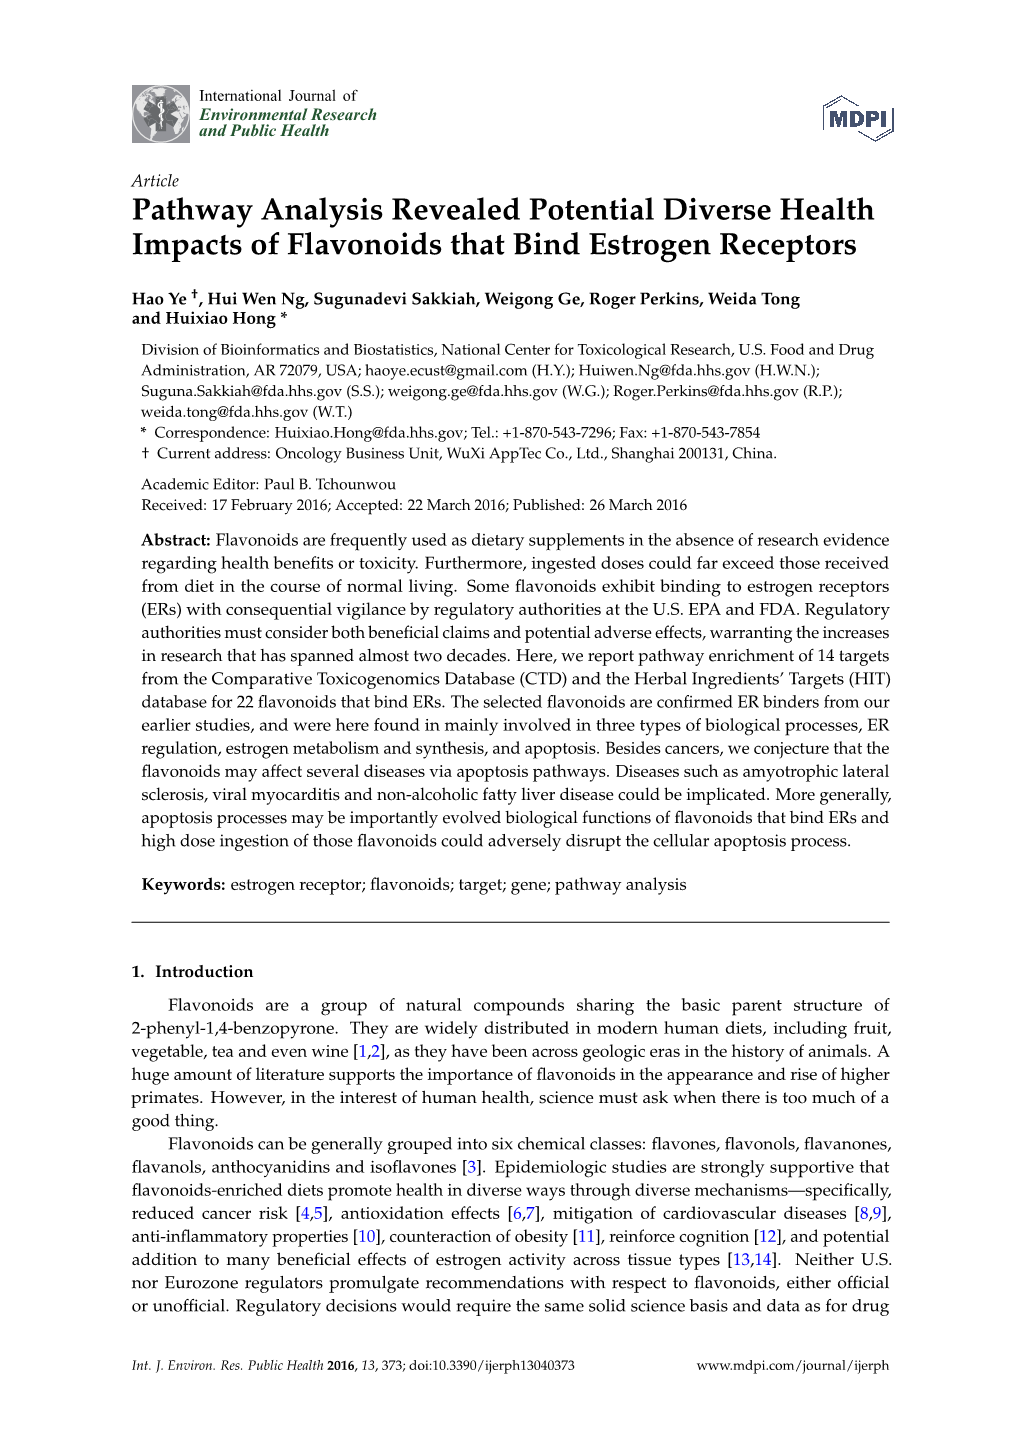 Pathway Analysis Revealed Potential Diverse Health Impacts of Flavonoids That Bind Estrogen Receptors